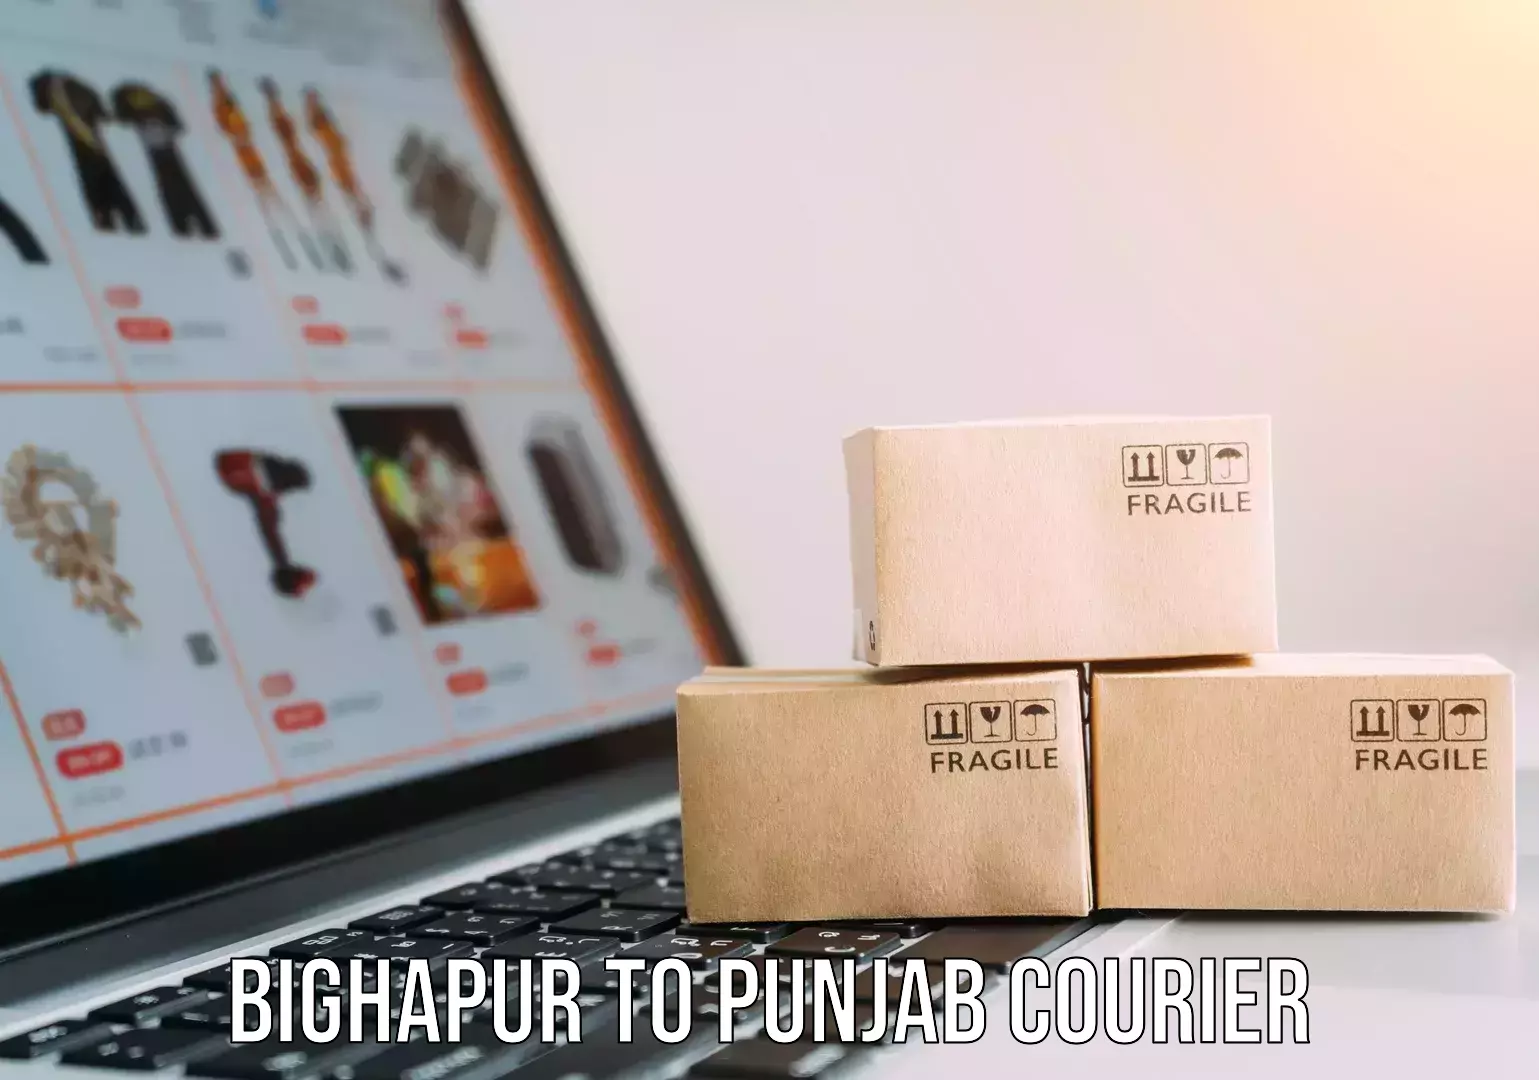 Affordable parcel service Bighapur to Punjab